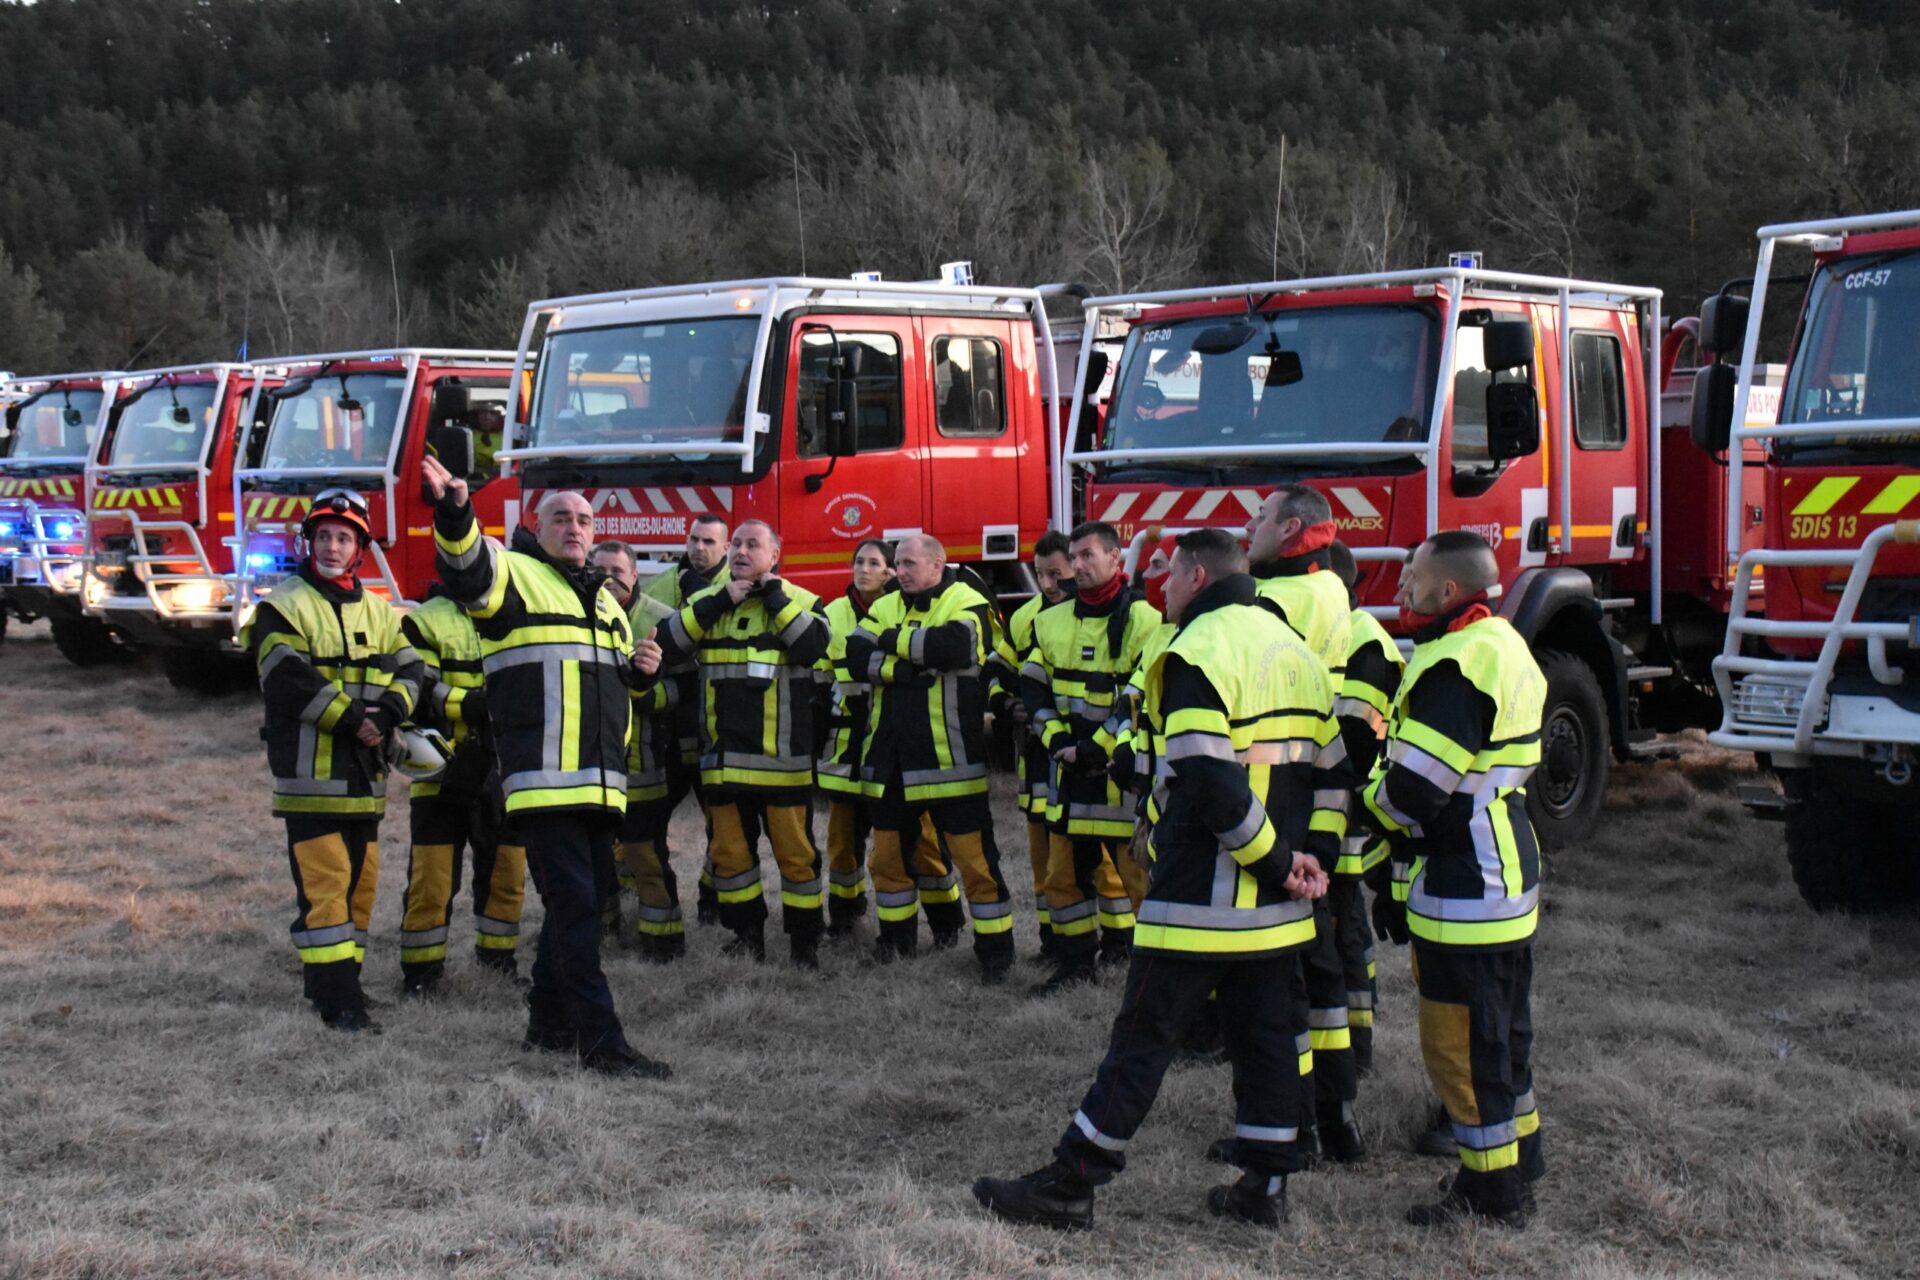 130 Pompiers13 Mobilises En Renfort Extra Departemental Pompiers13